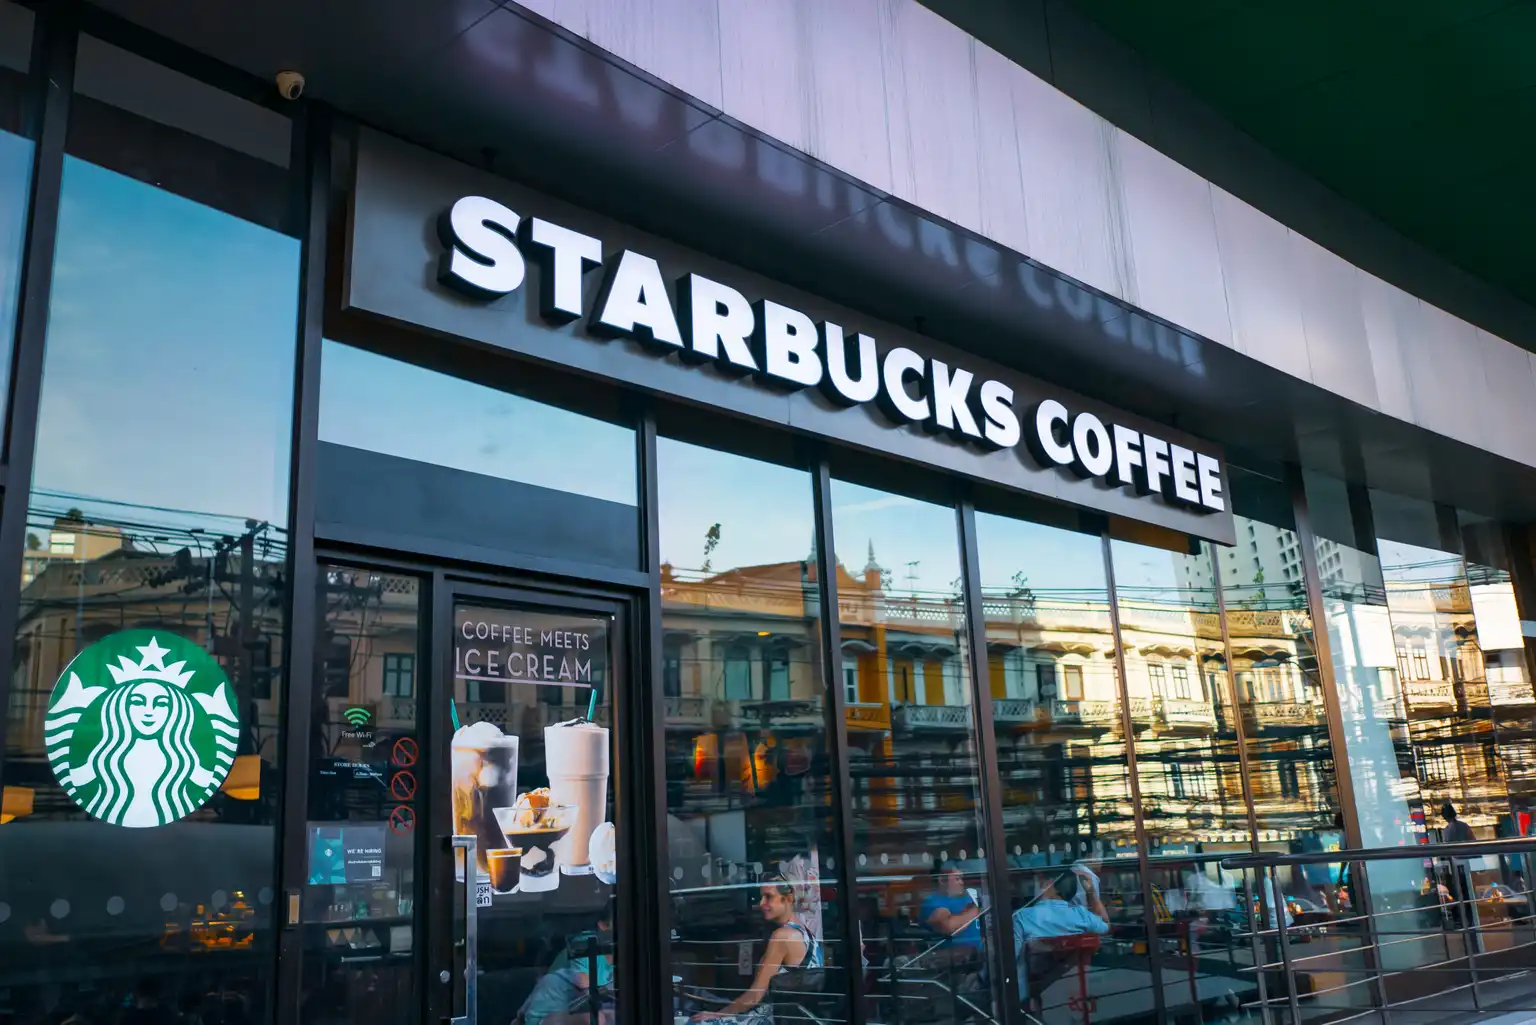 Starbucks: McDonald's Store Growth Plans Are Bullish For Starbucks - Seeking Alpha